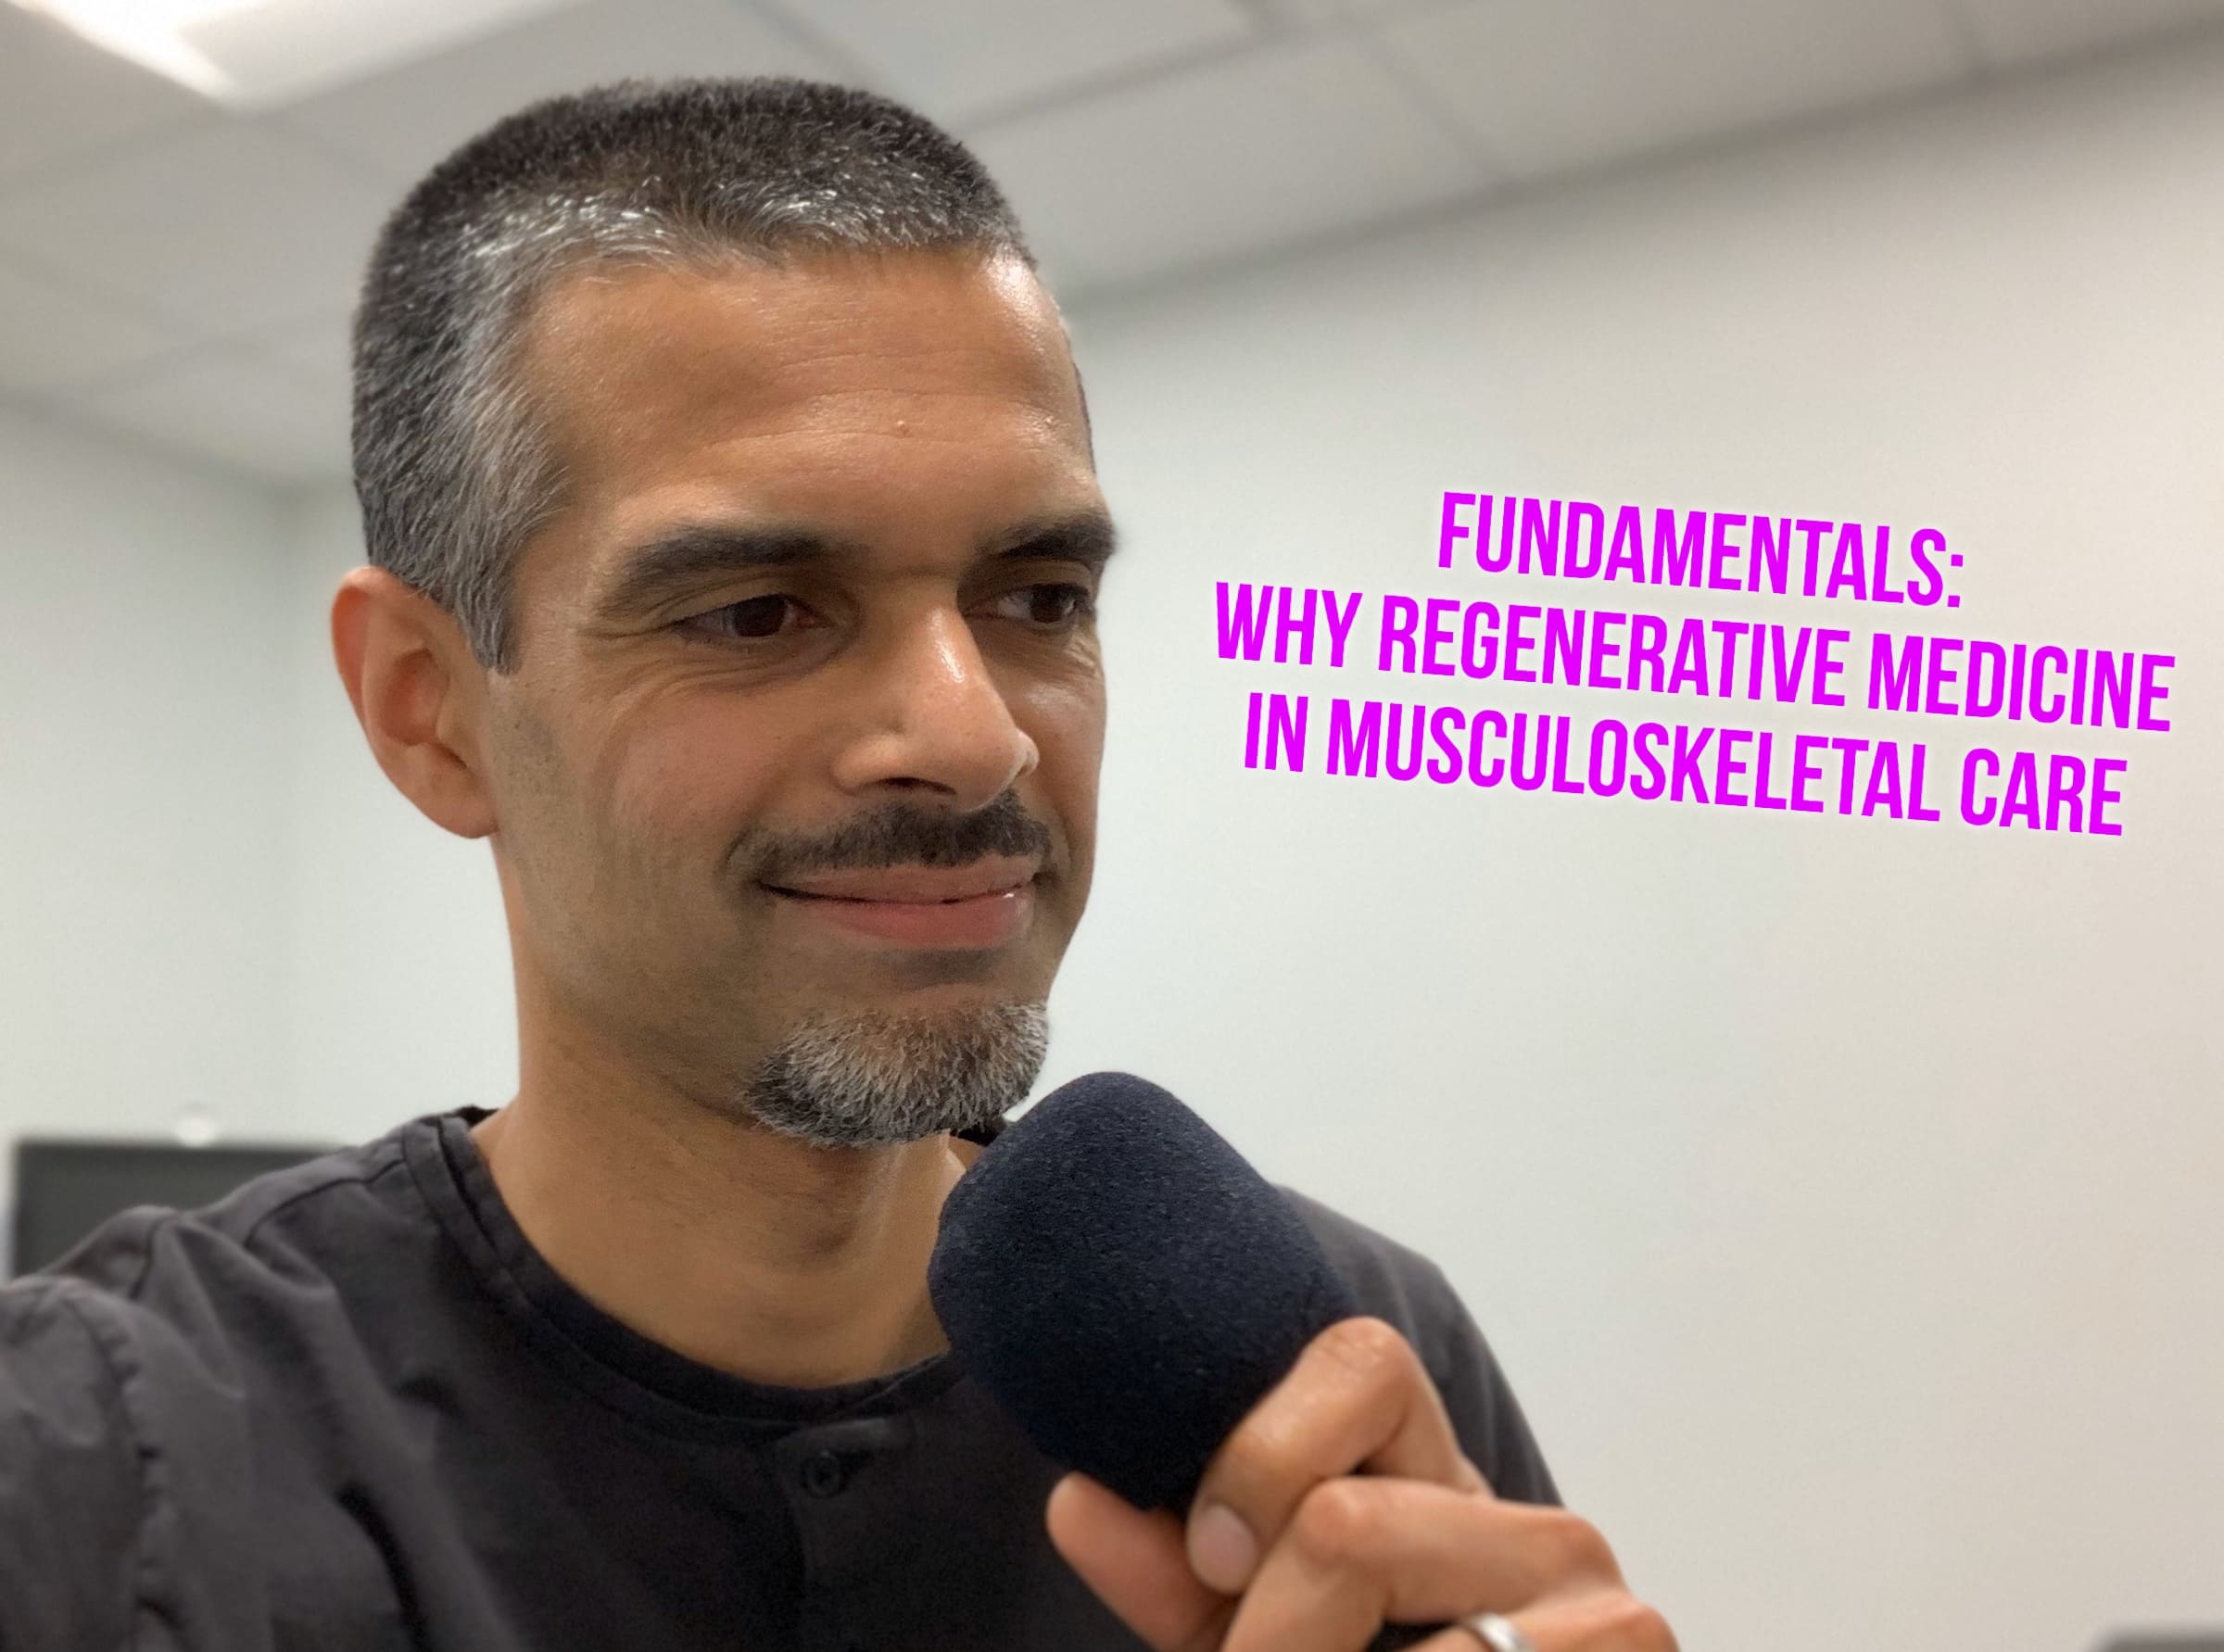 Fundamentals- Why Regenerative Medicine for Musculoskeletal care